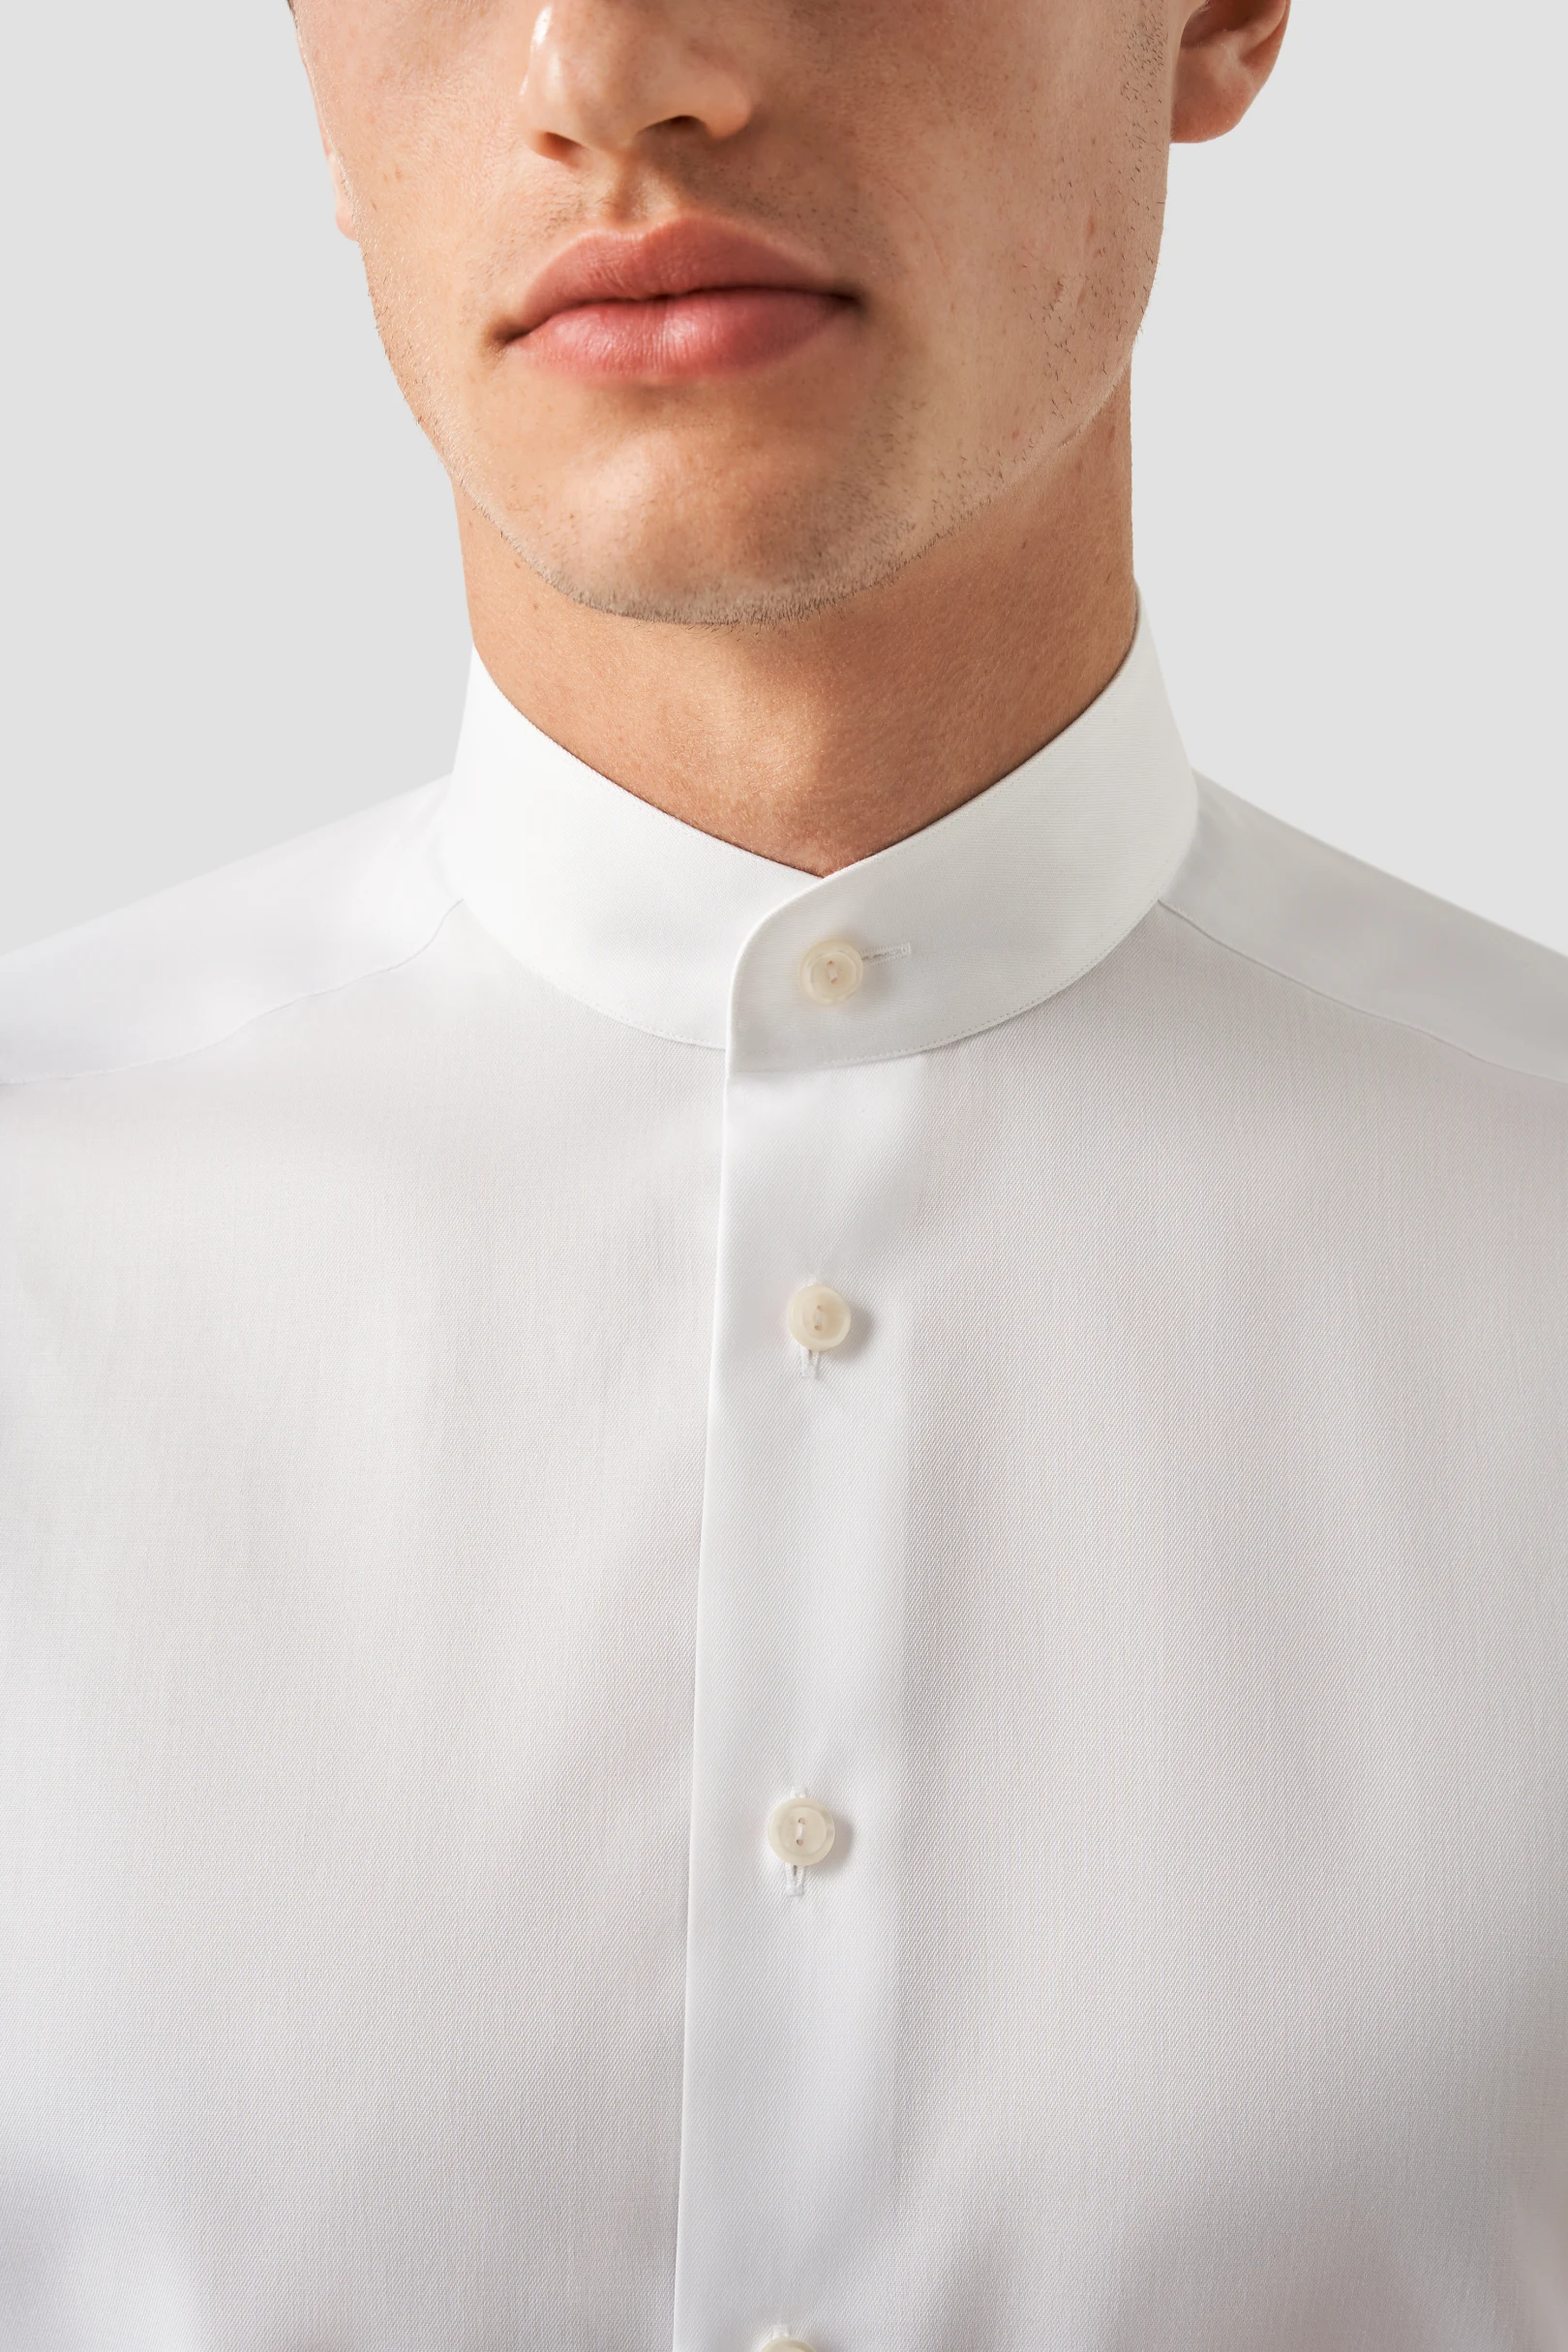 mandarin collar shirt